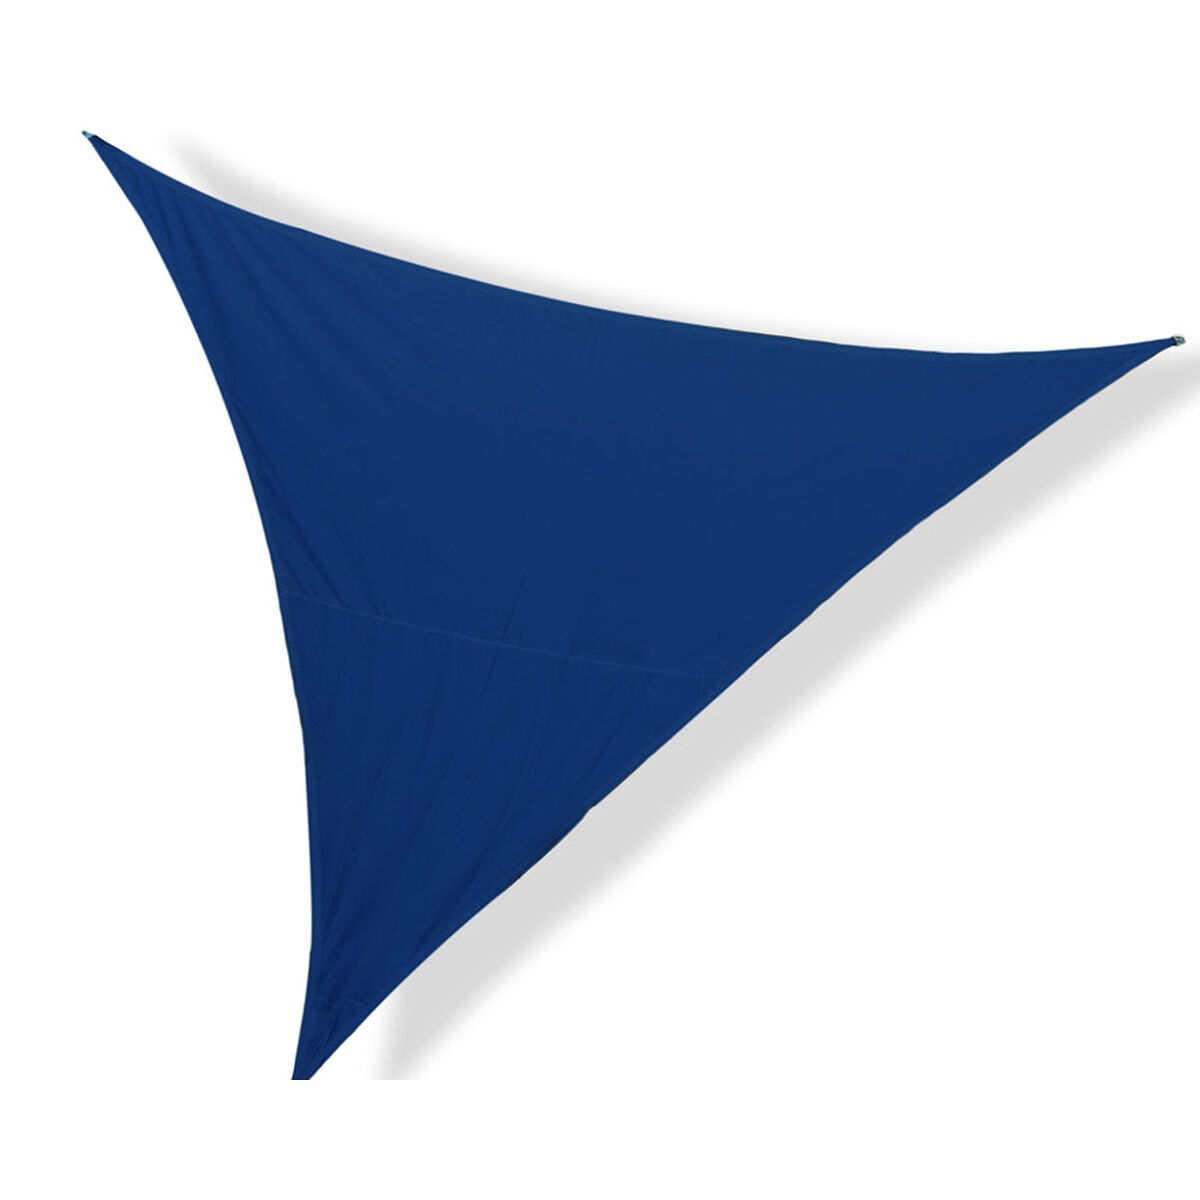 Awning Blue 5 x 5 x 5 cm Triangular